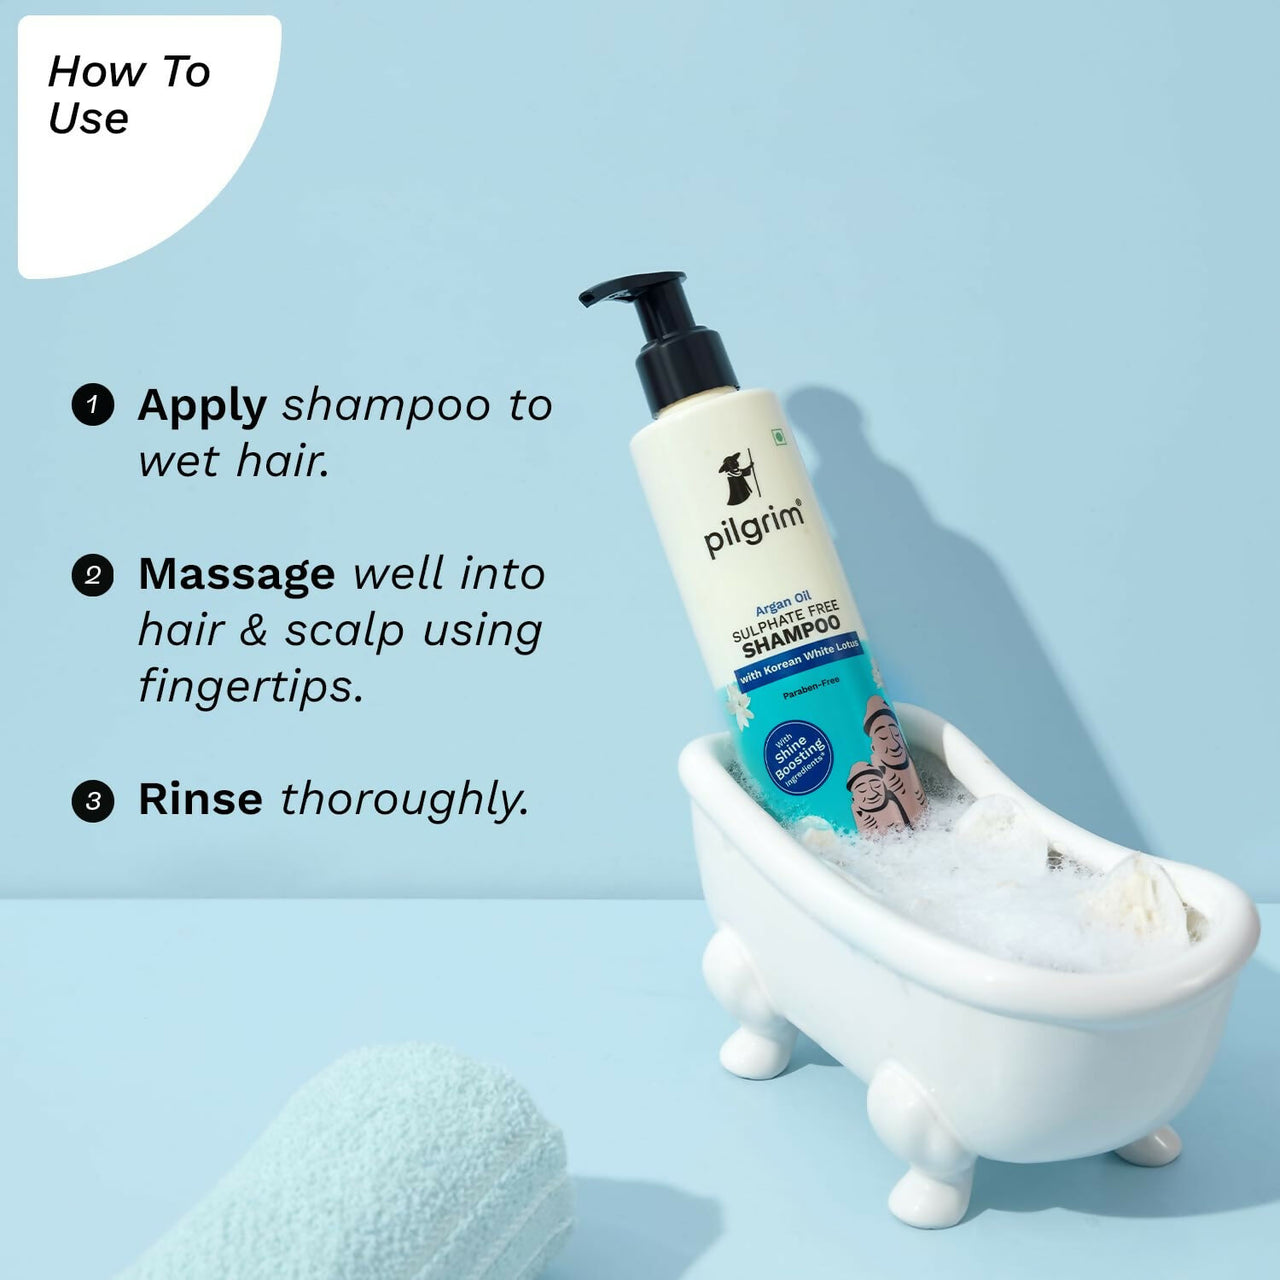 Pilgrim Sulphate Free Shampoo For Dry Frizzy Hair With Korean White Lotus - Distacart